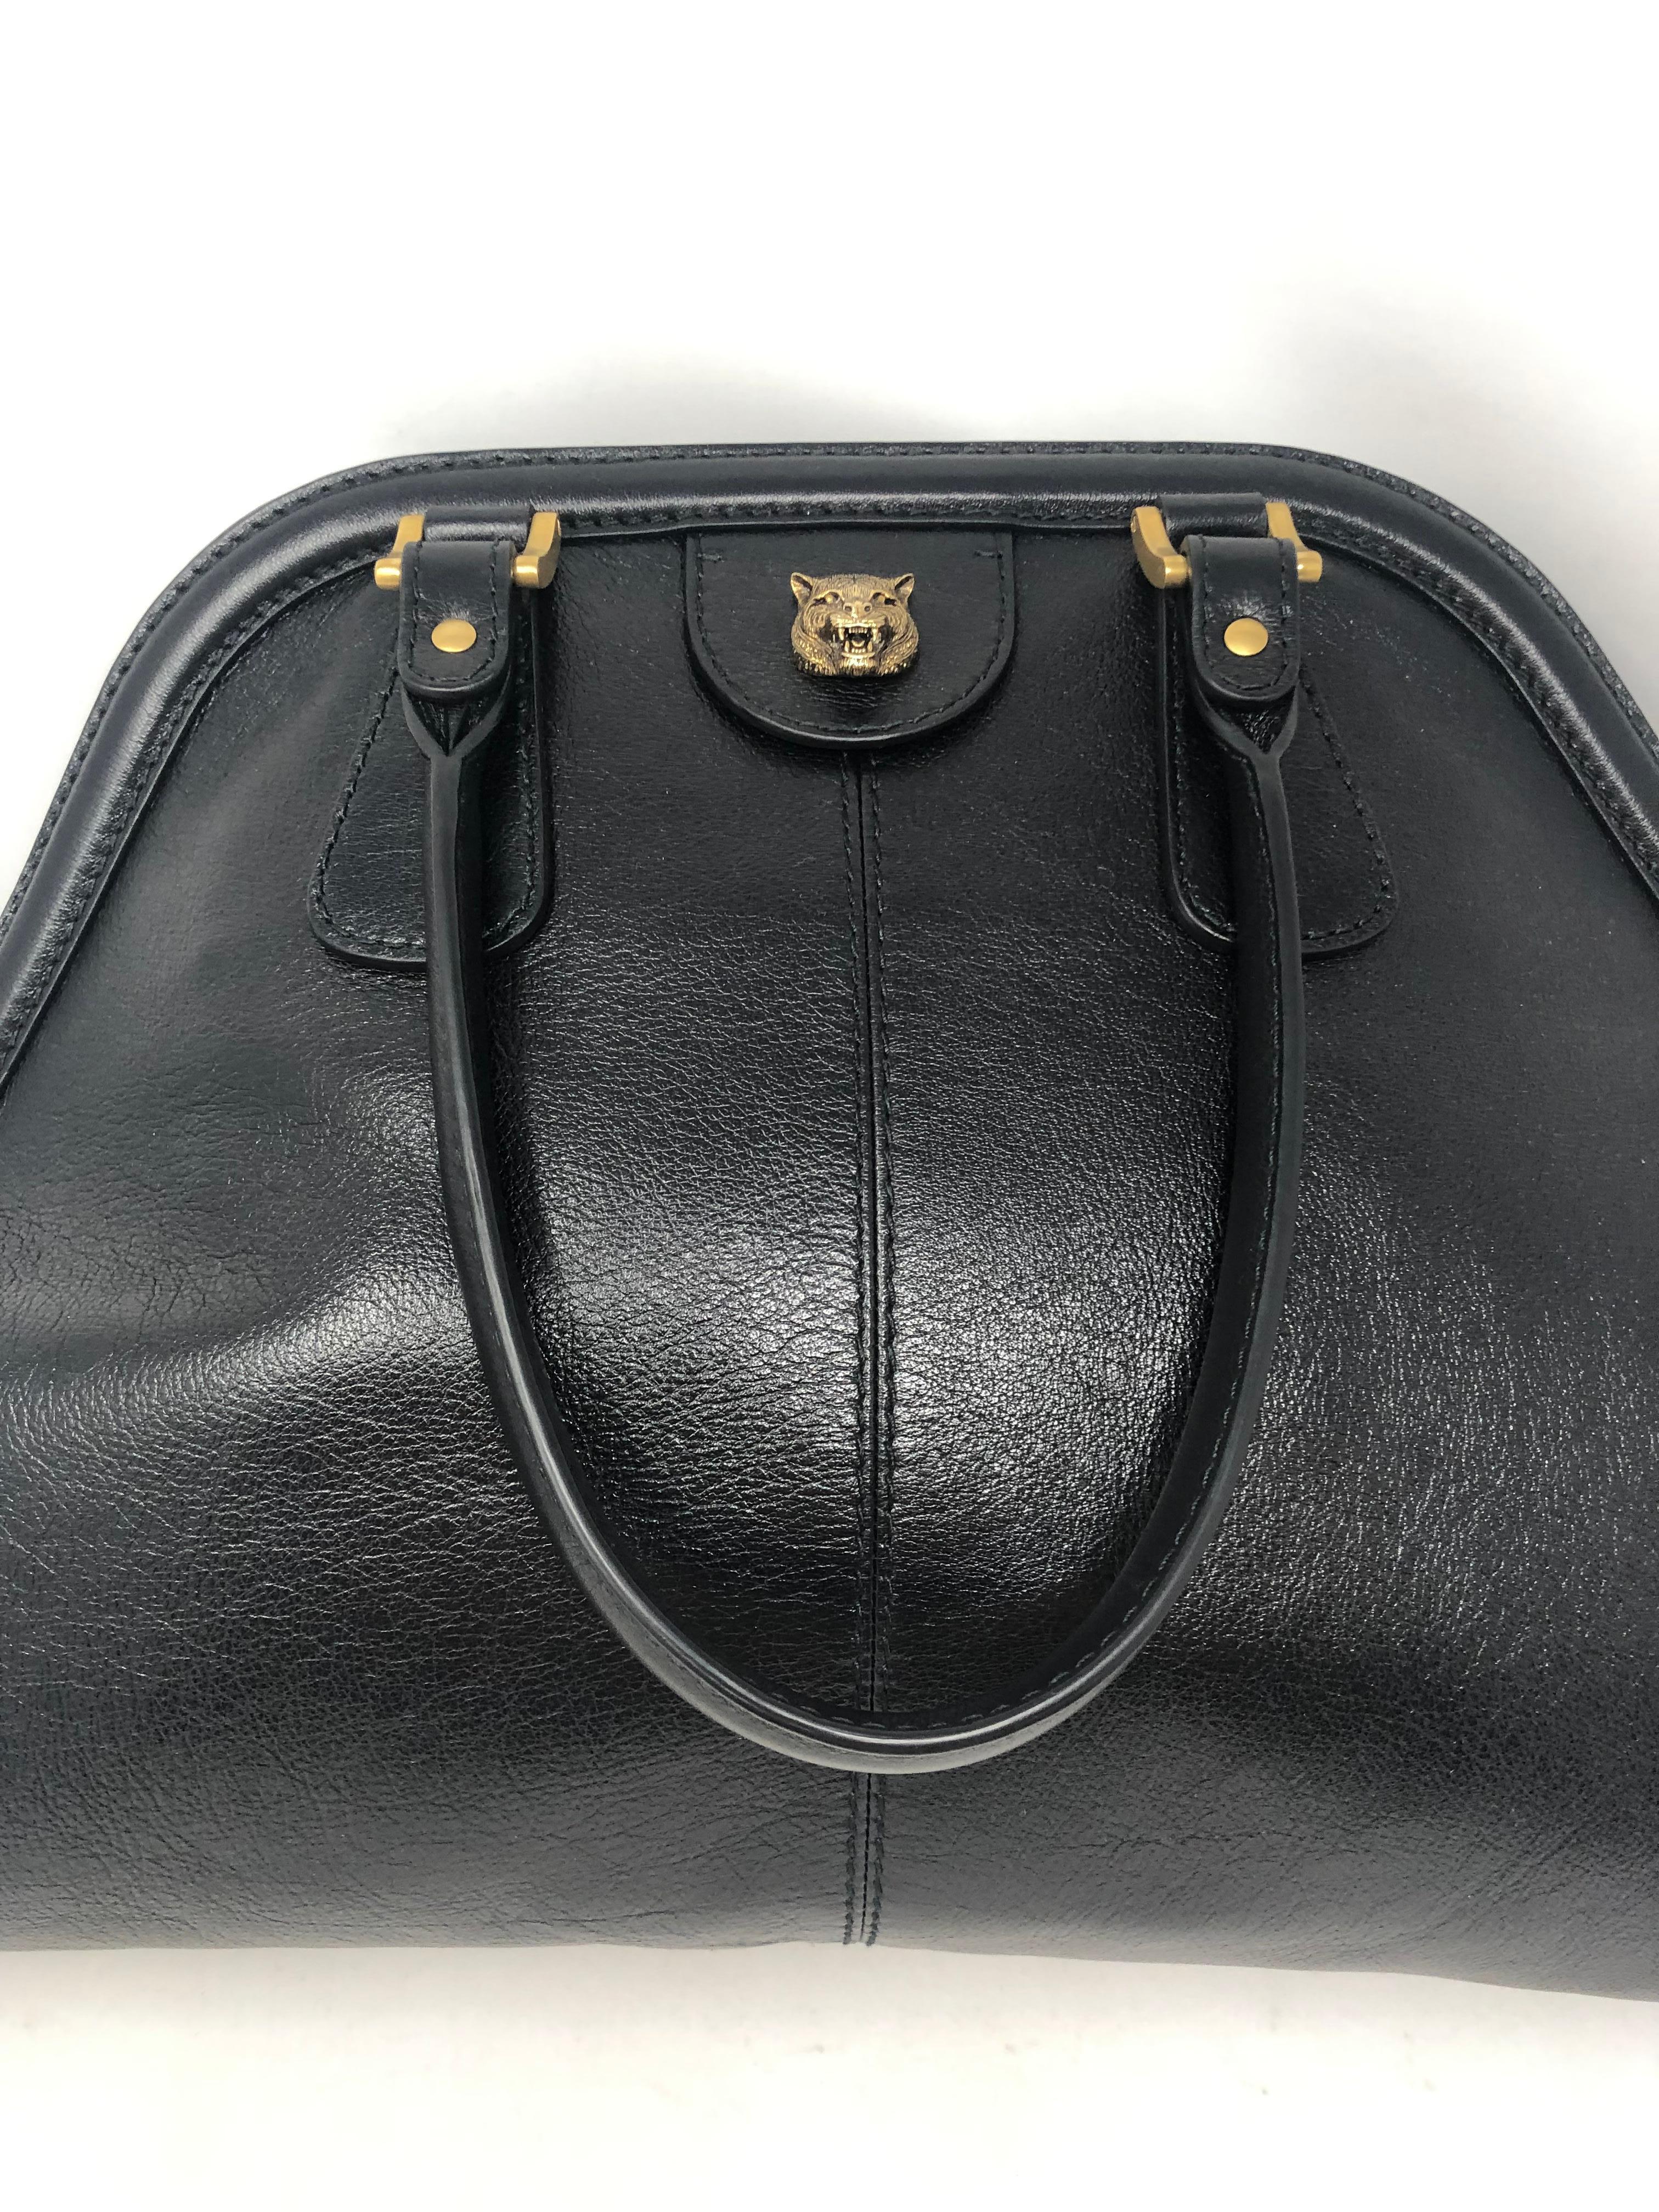 Gucci Re(Belle) Large Black Leather Bag  5